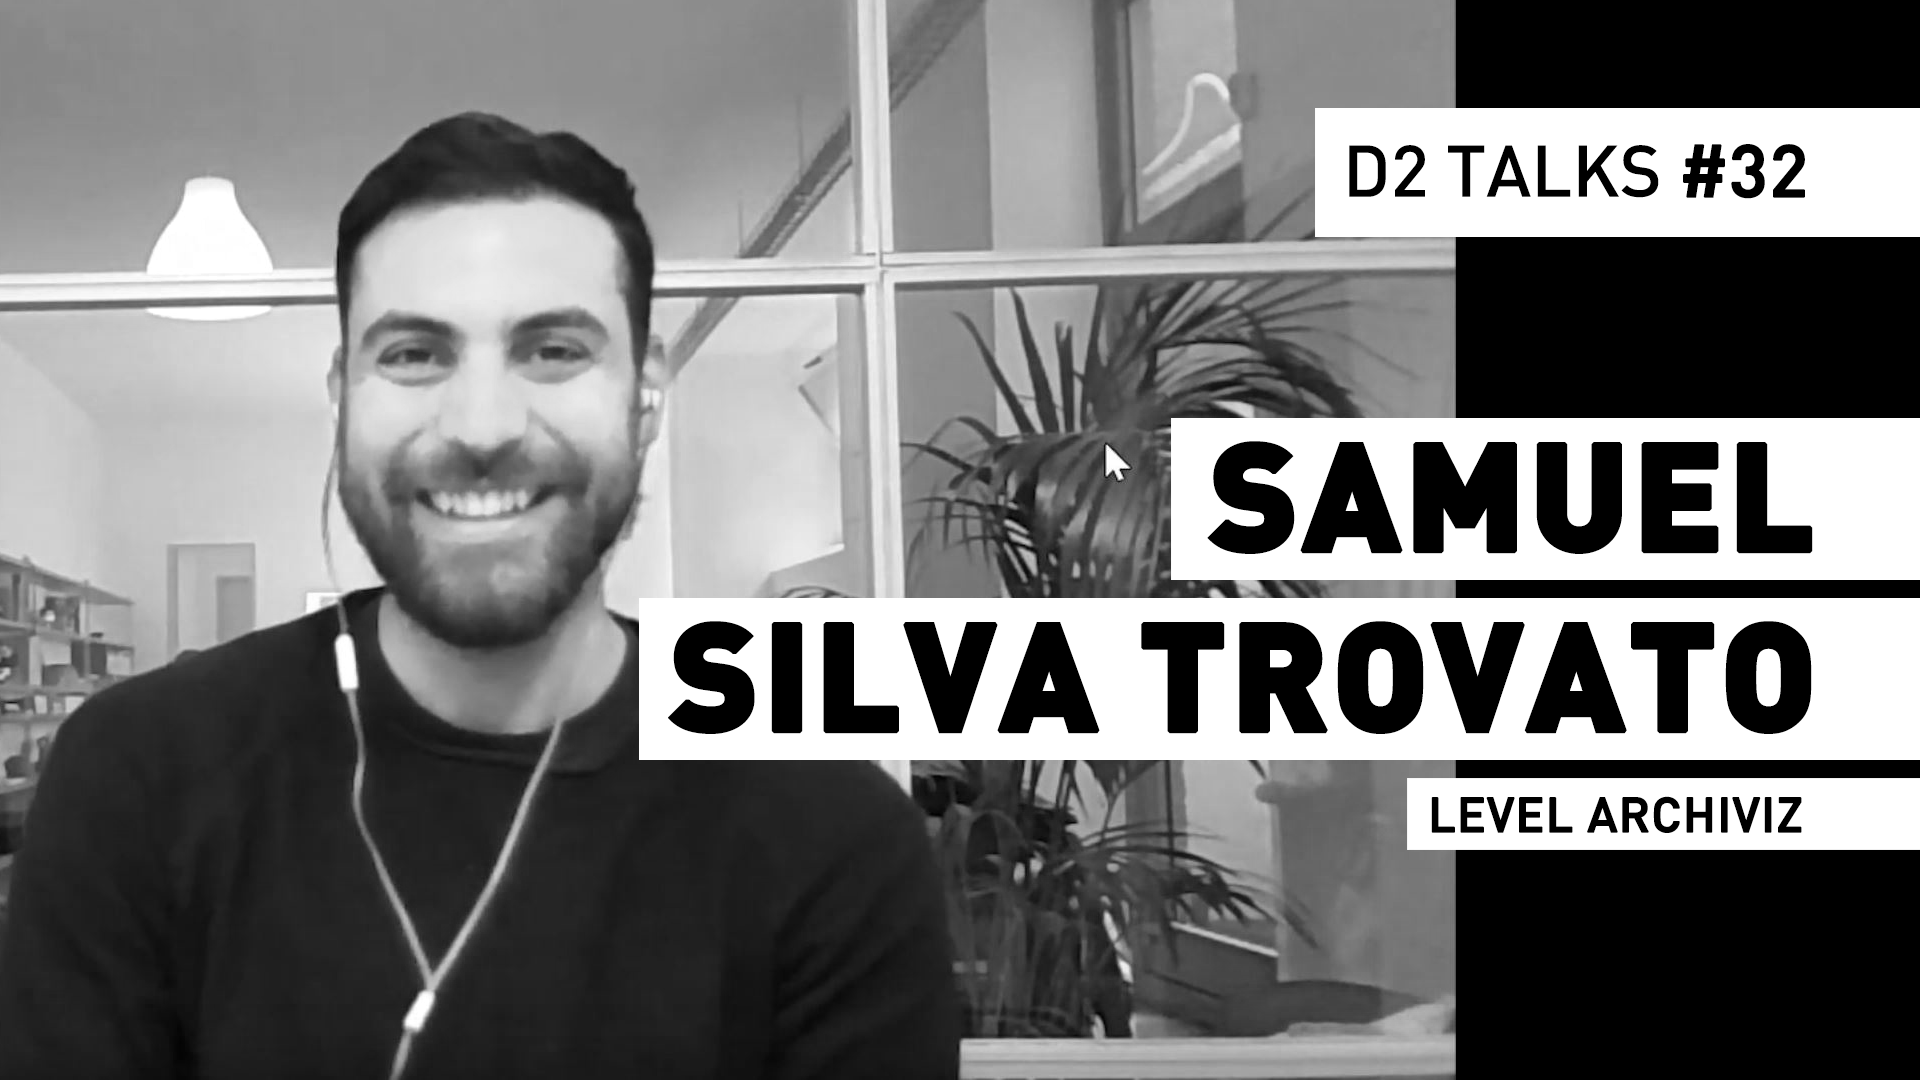 D2 Talks #32: Samuel Silva Trovato of Level Archiviz